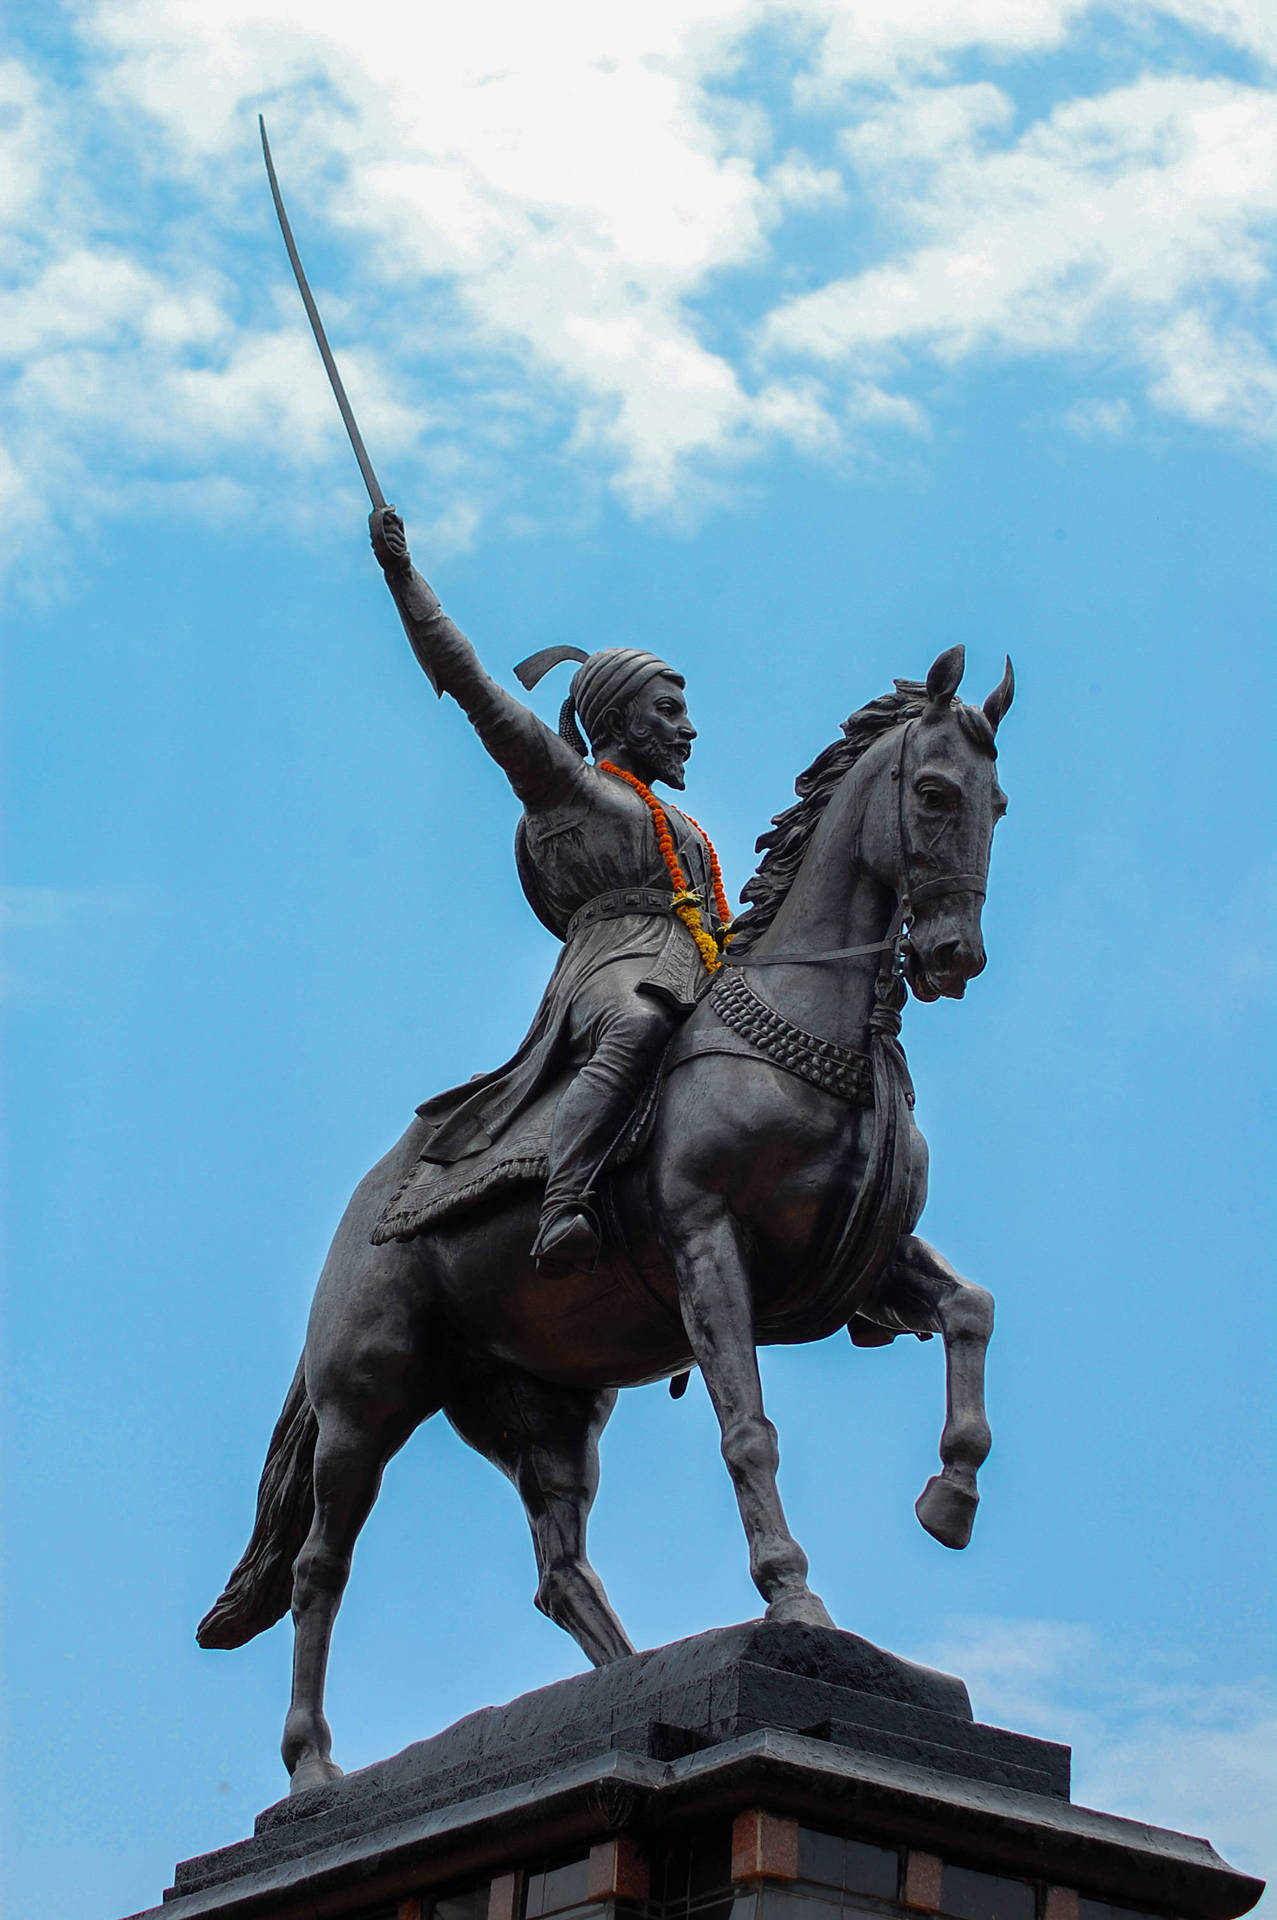 Caption: Majestic Chhatrapati Shivaji Maharaj Statue Riding On Horseback